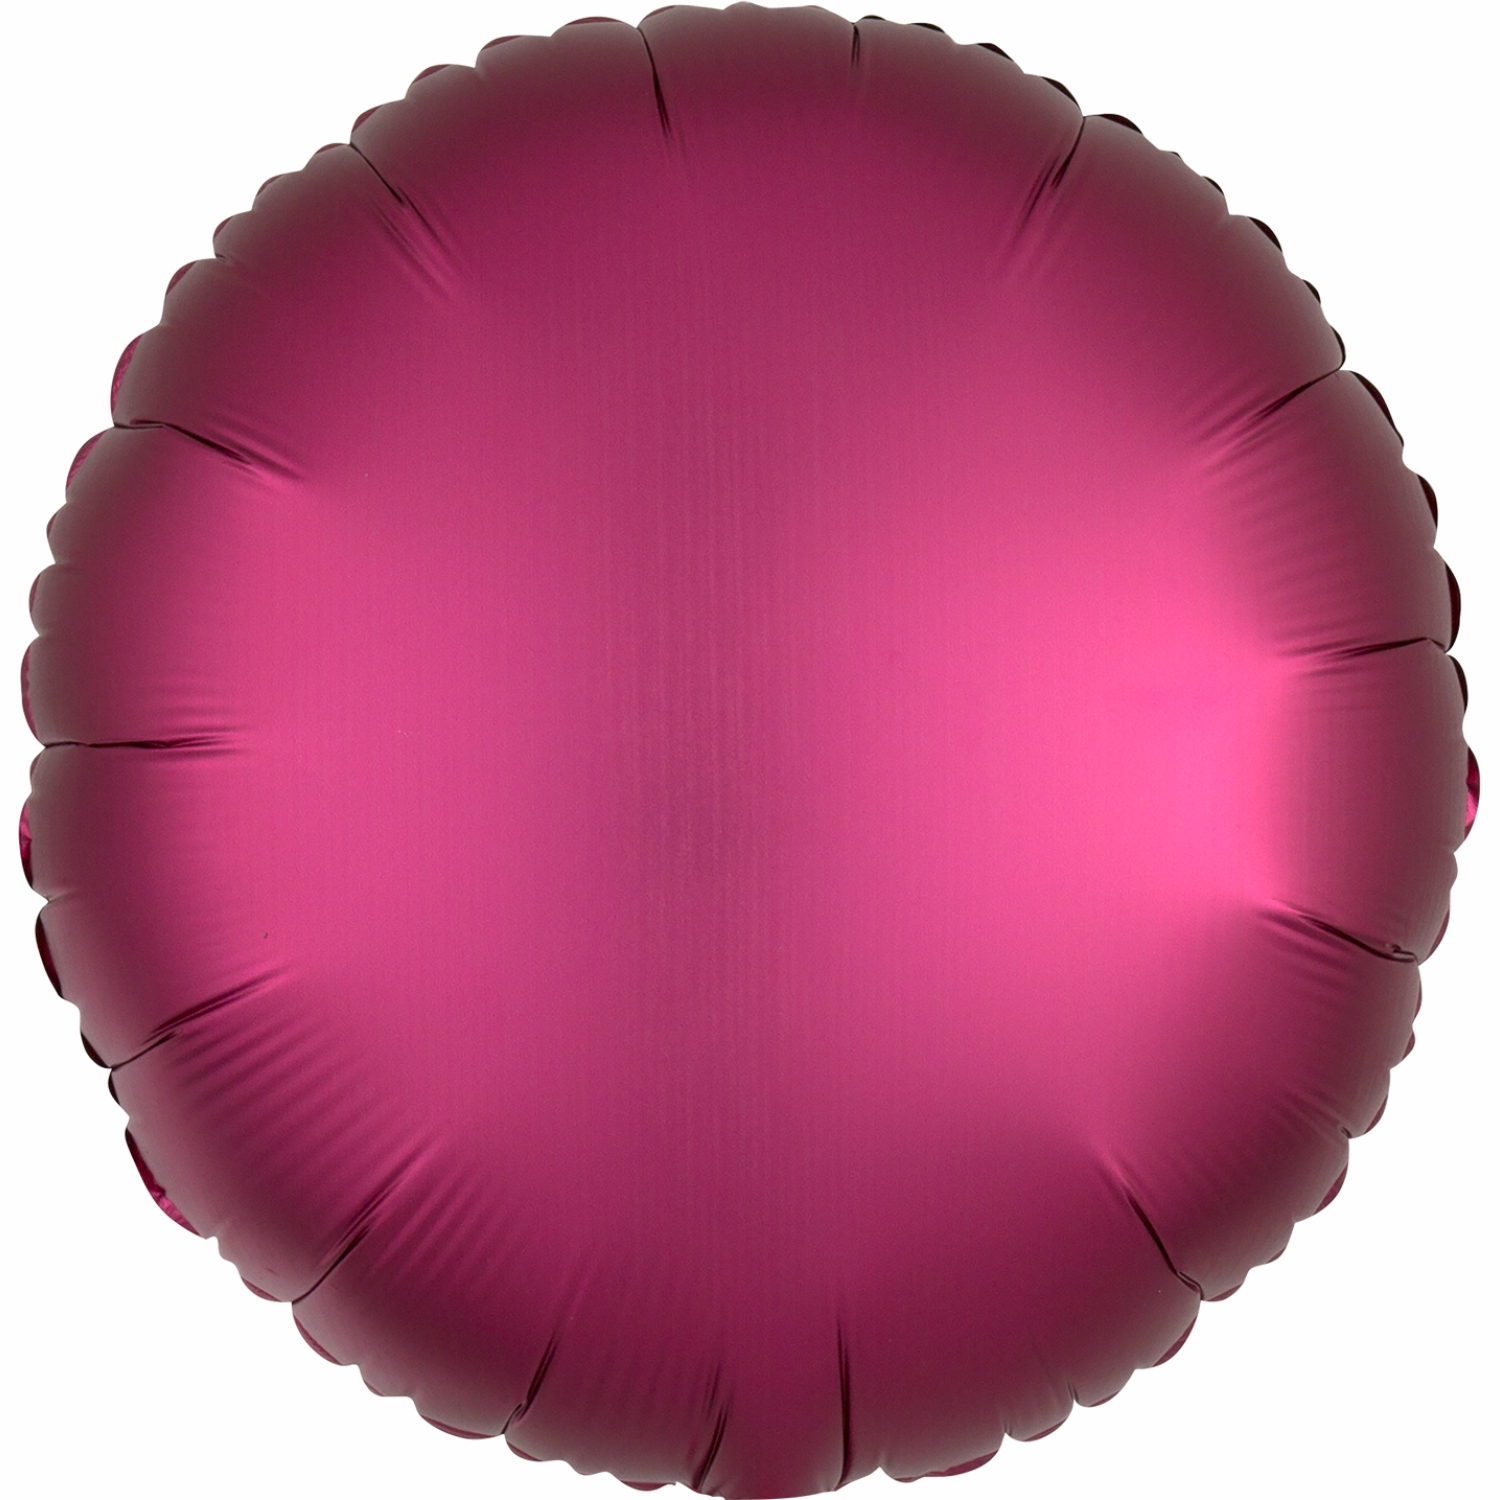 http://images.officebrain.com/migration-api-hidden-new/web/images/626/myrn-round-pomegranate.jpg